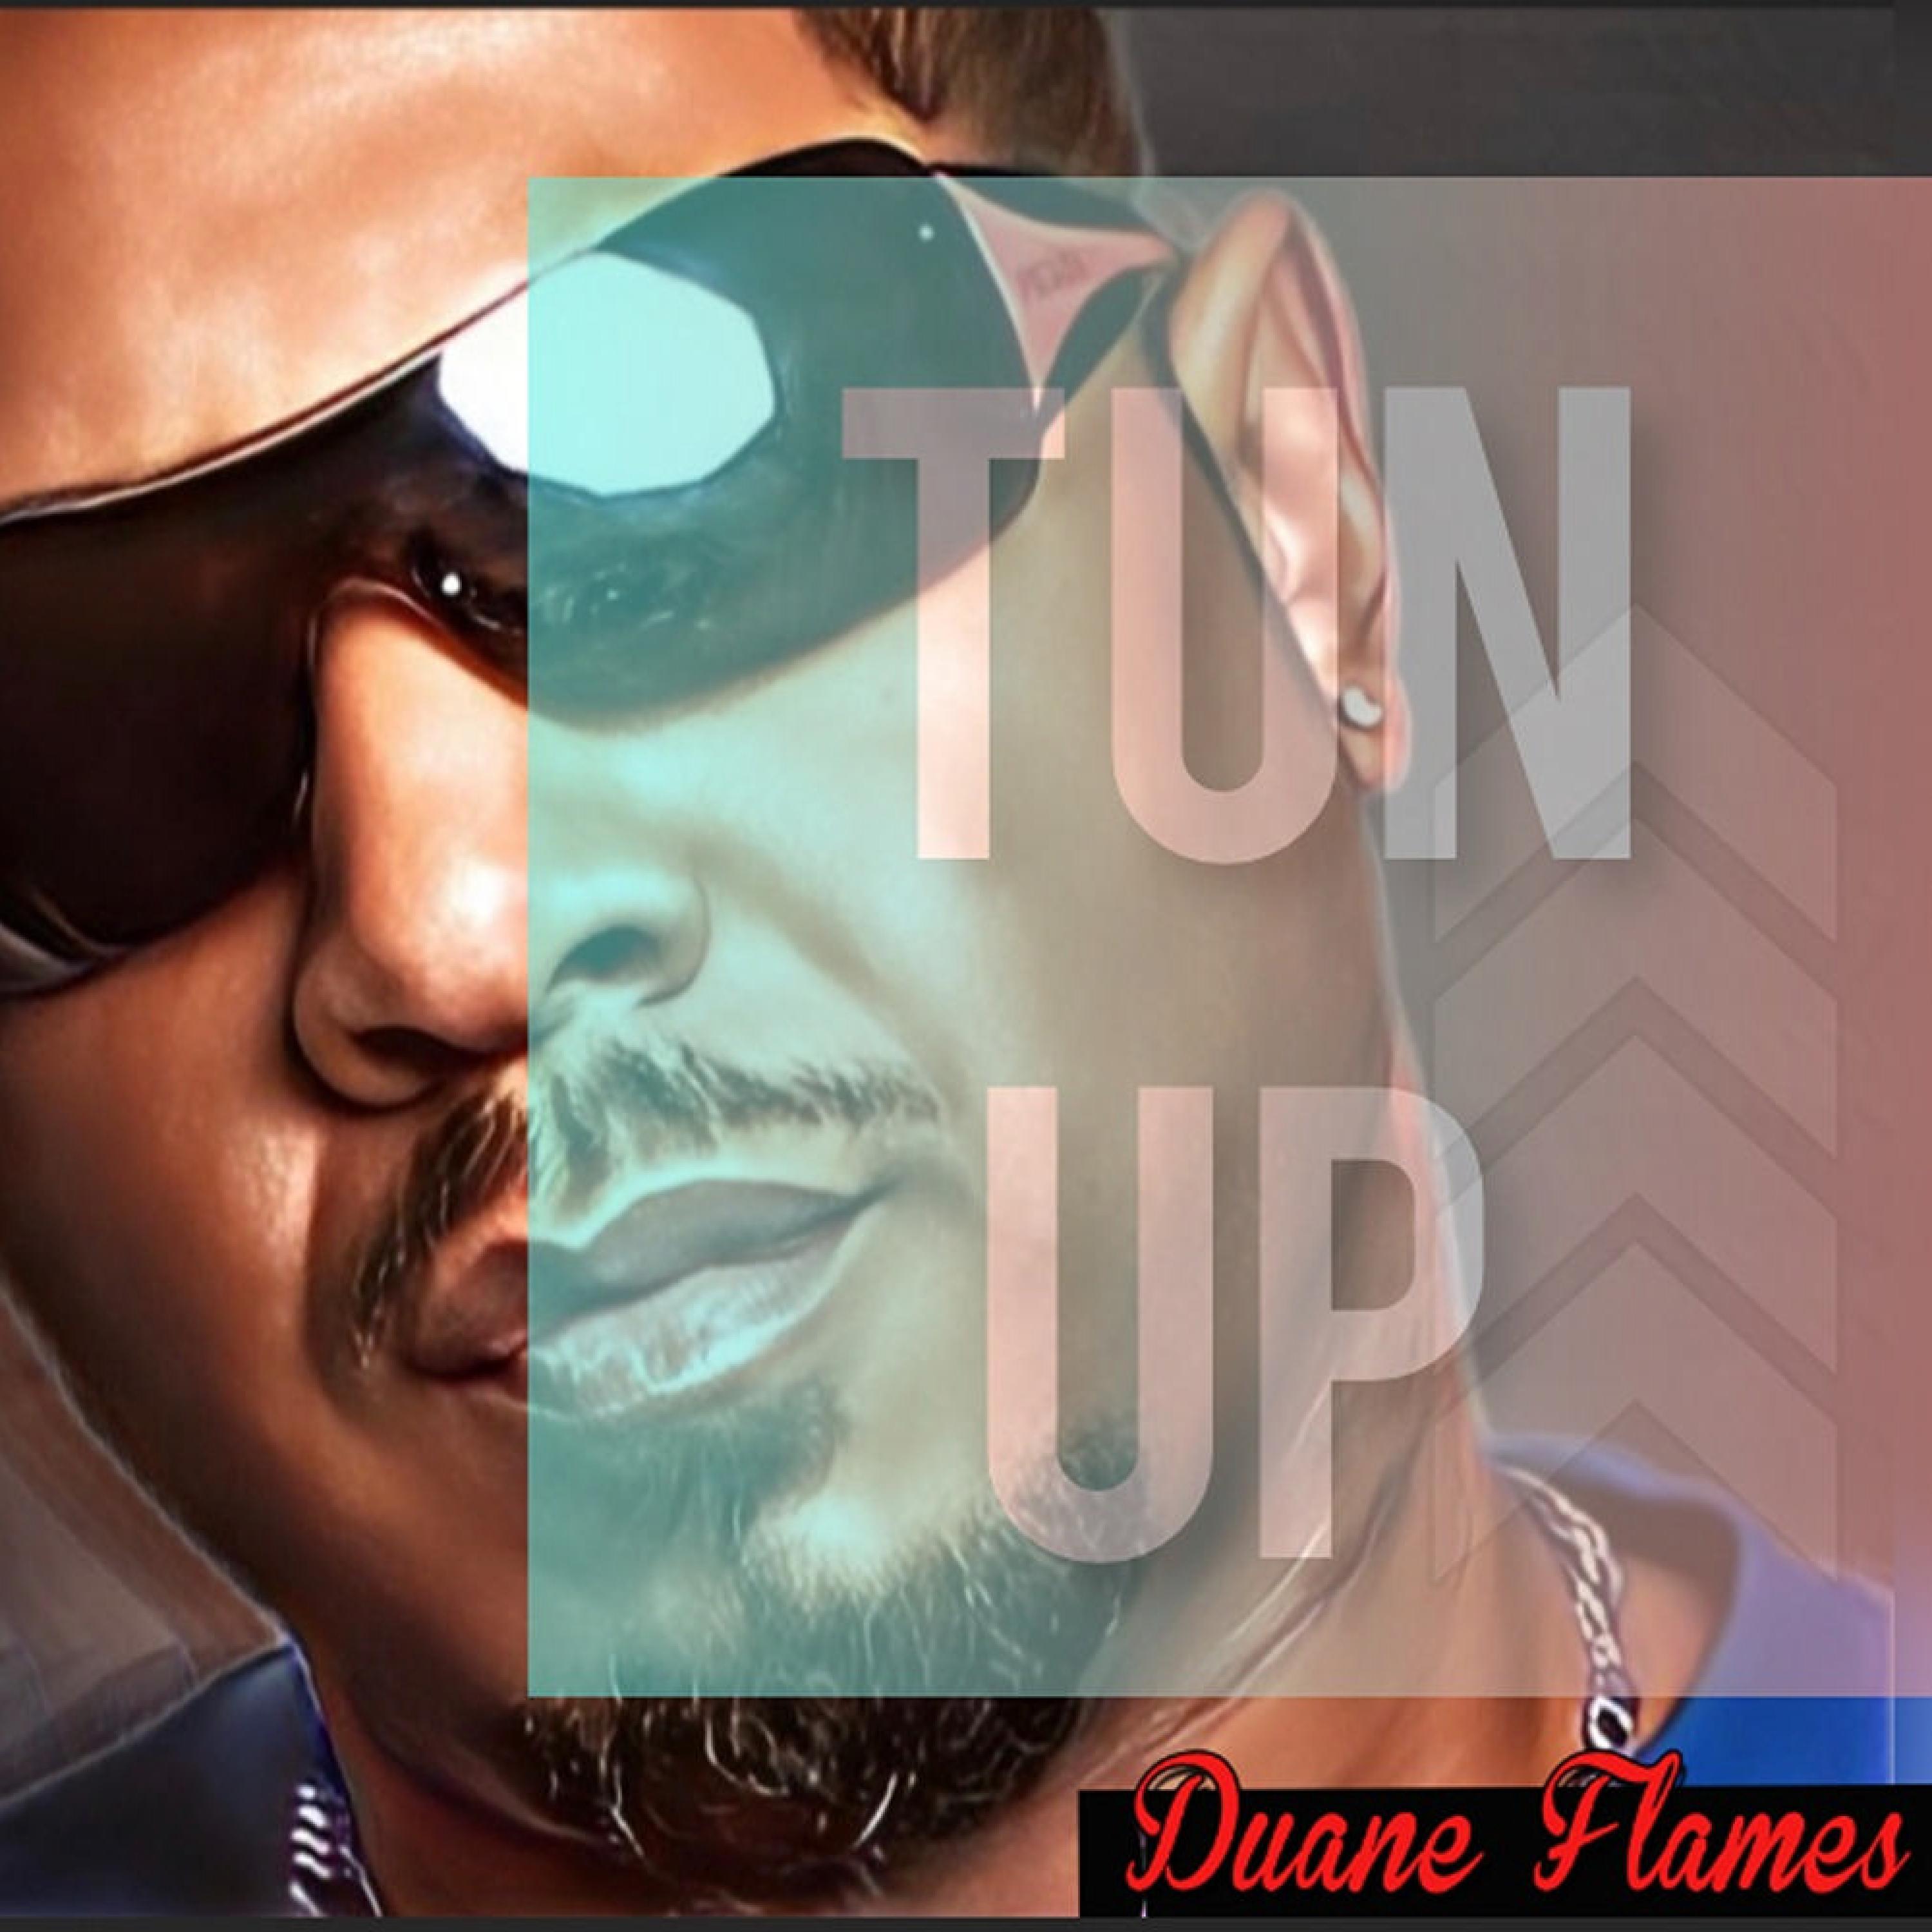 Duane Flames - Tun Up